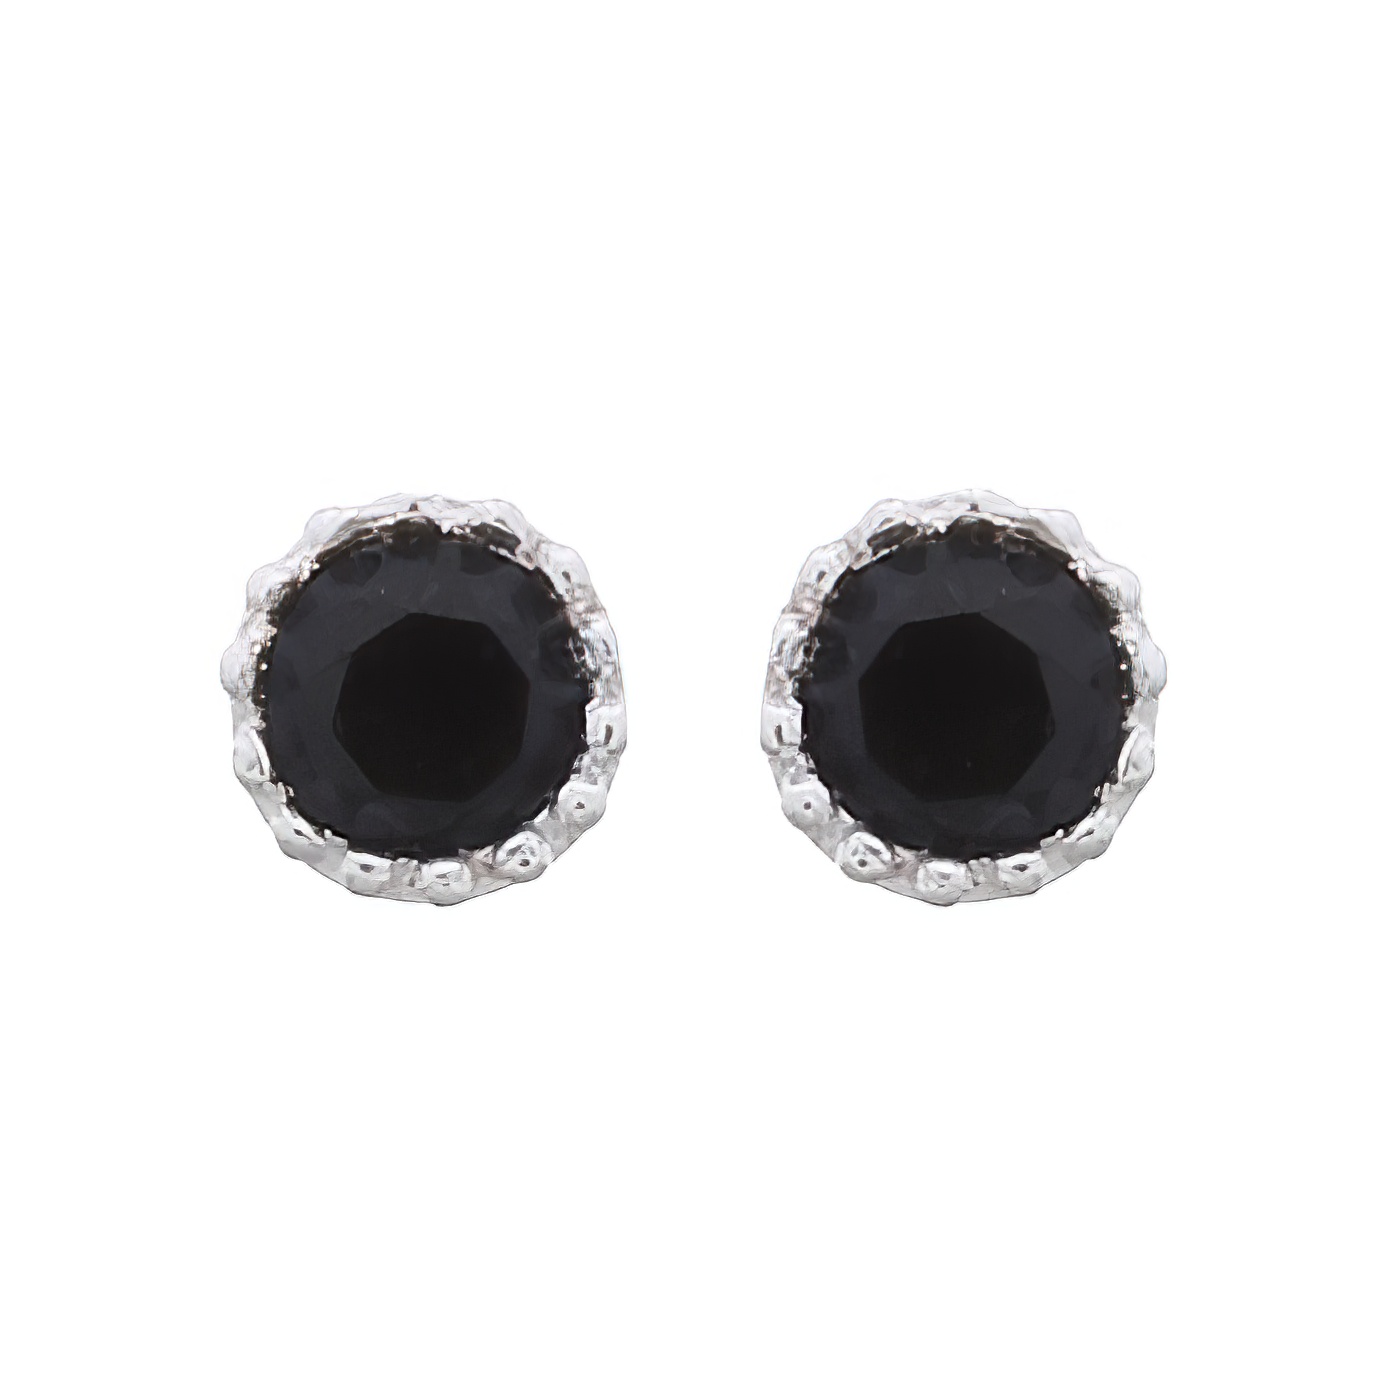 Faceted Mini Black Cubic Zirconia 925 Stud Earrings Silver 